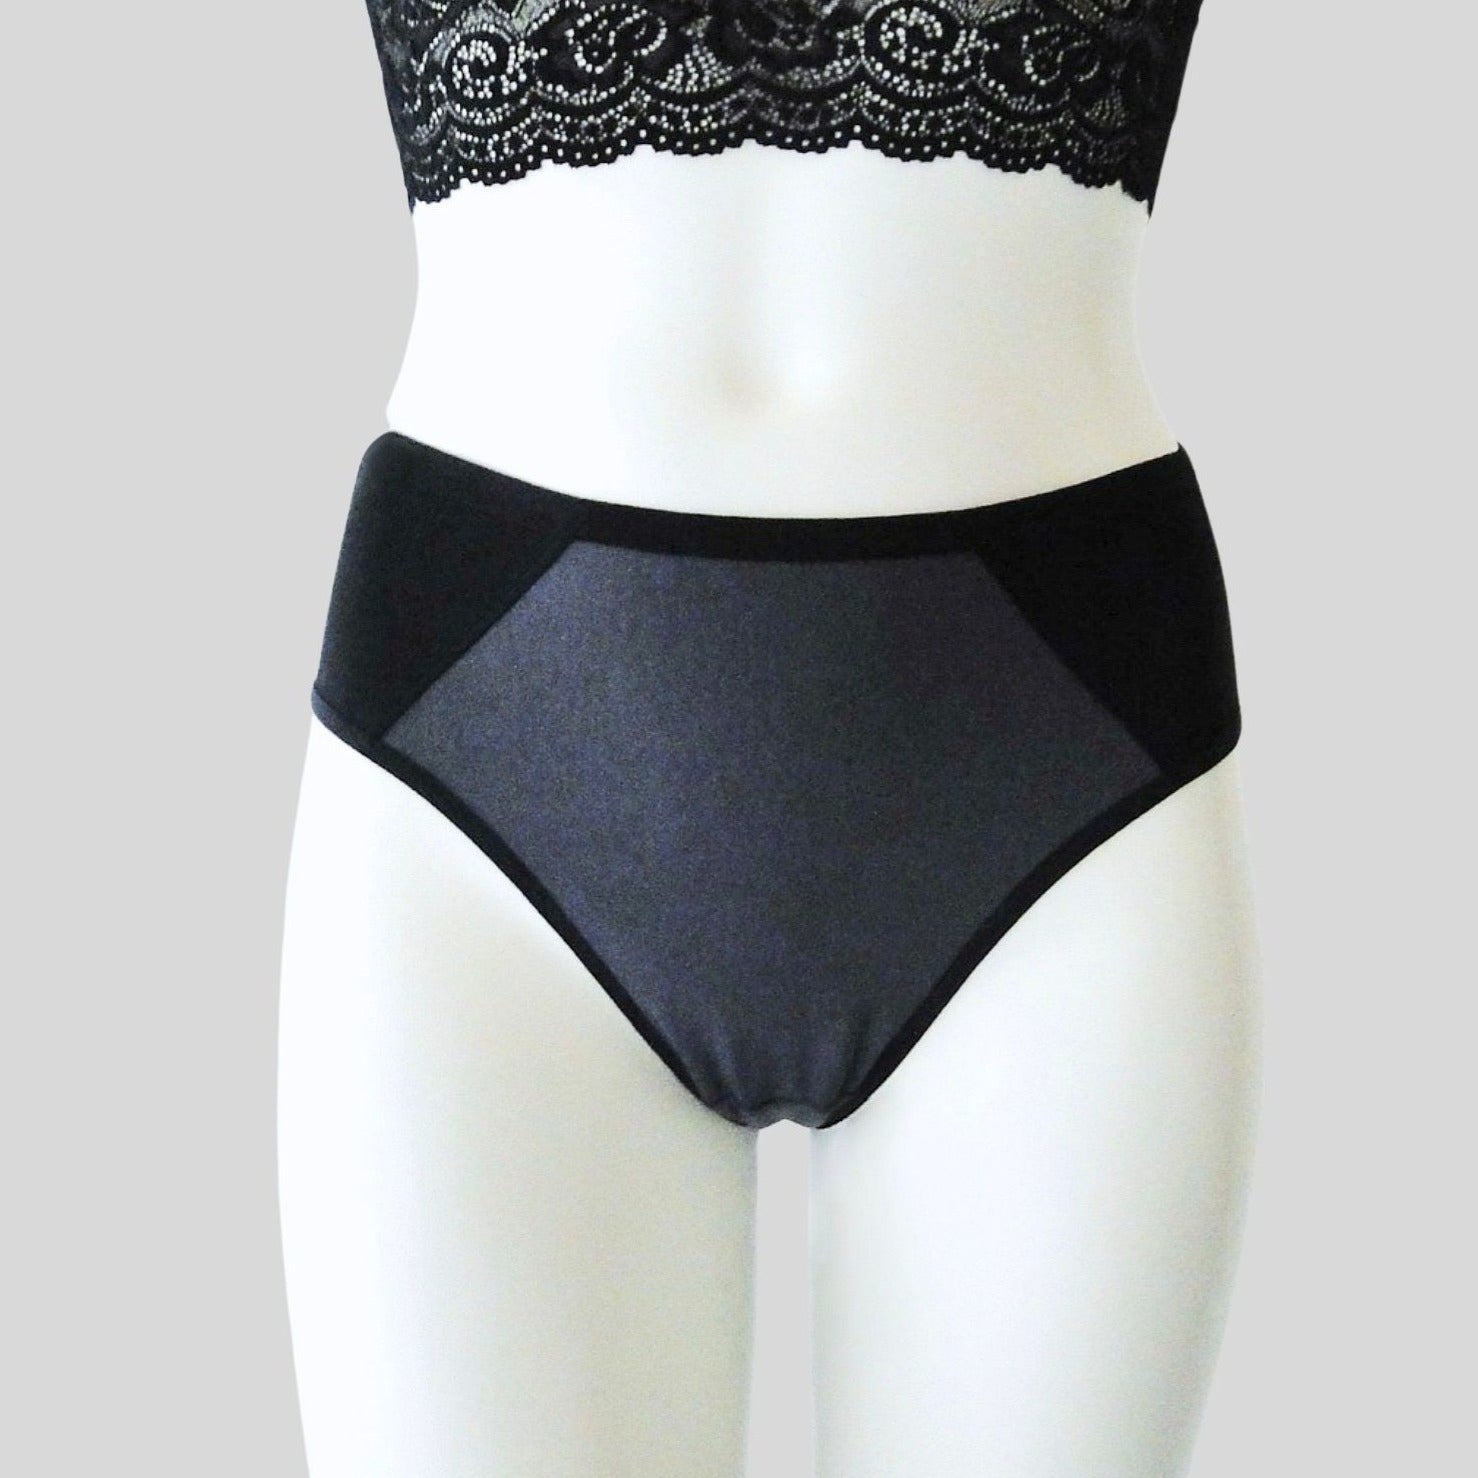 Organic cotton bikini underwear - set of 2 panties